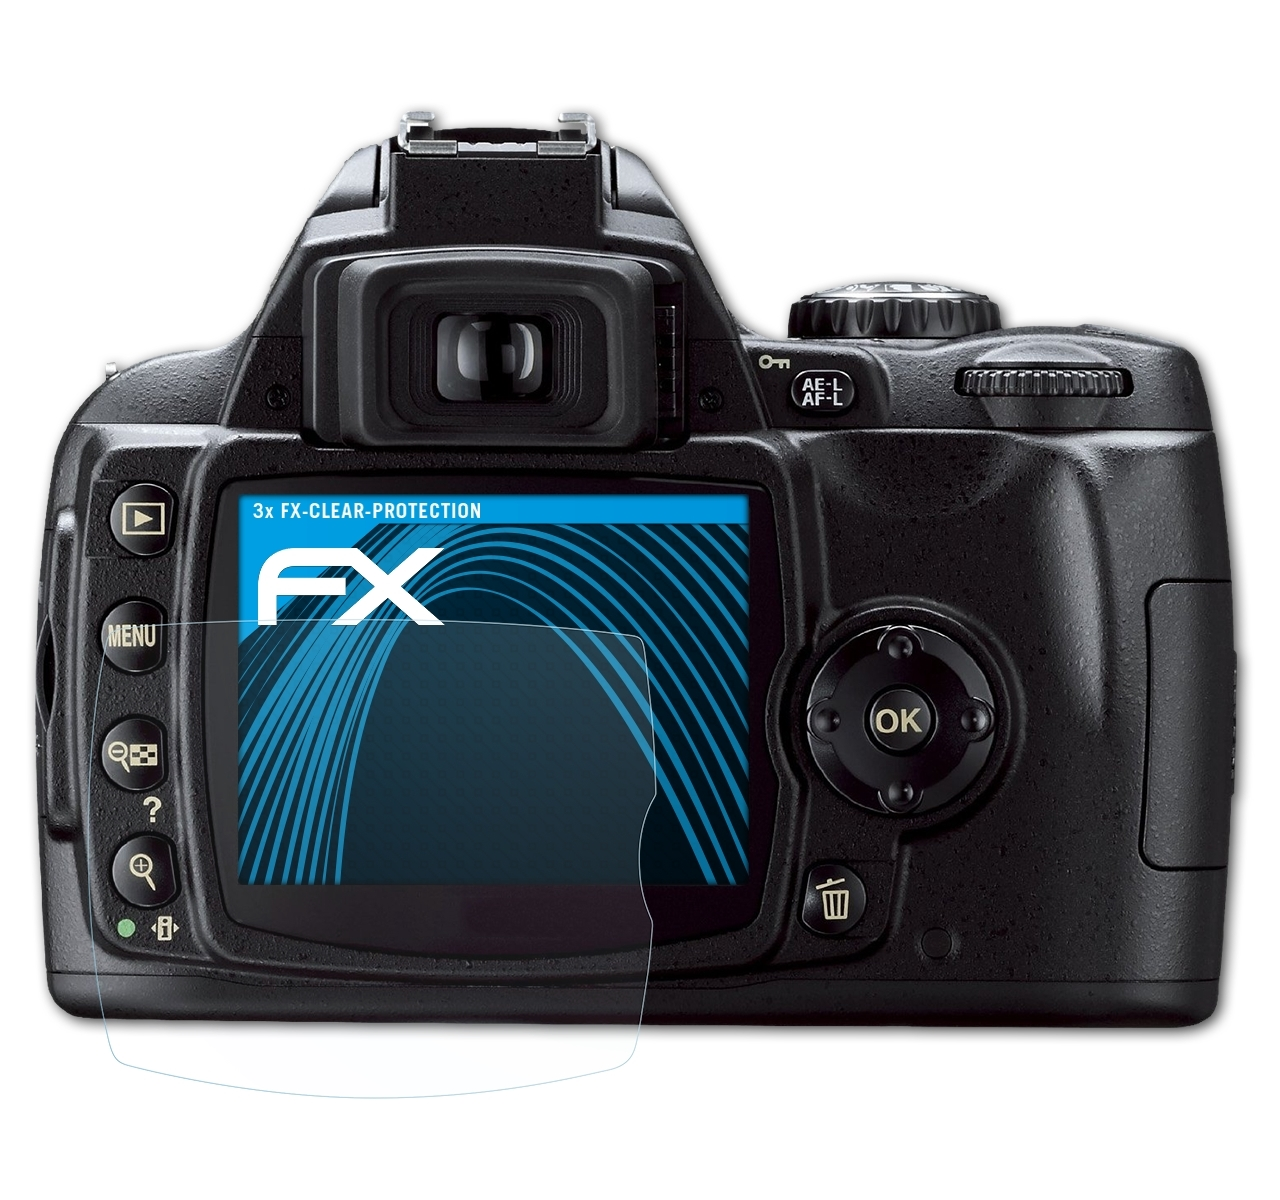 ATFOLIX 3x FX-Clear Displayschutz(für D40X) Nikon